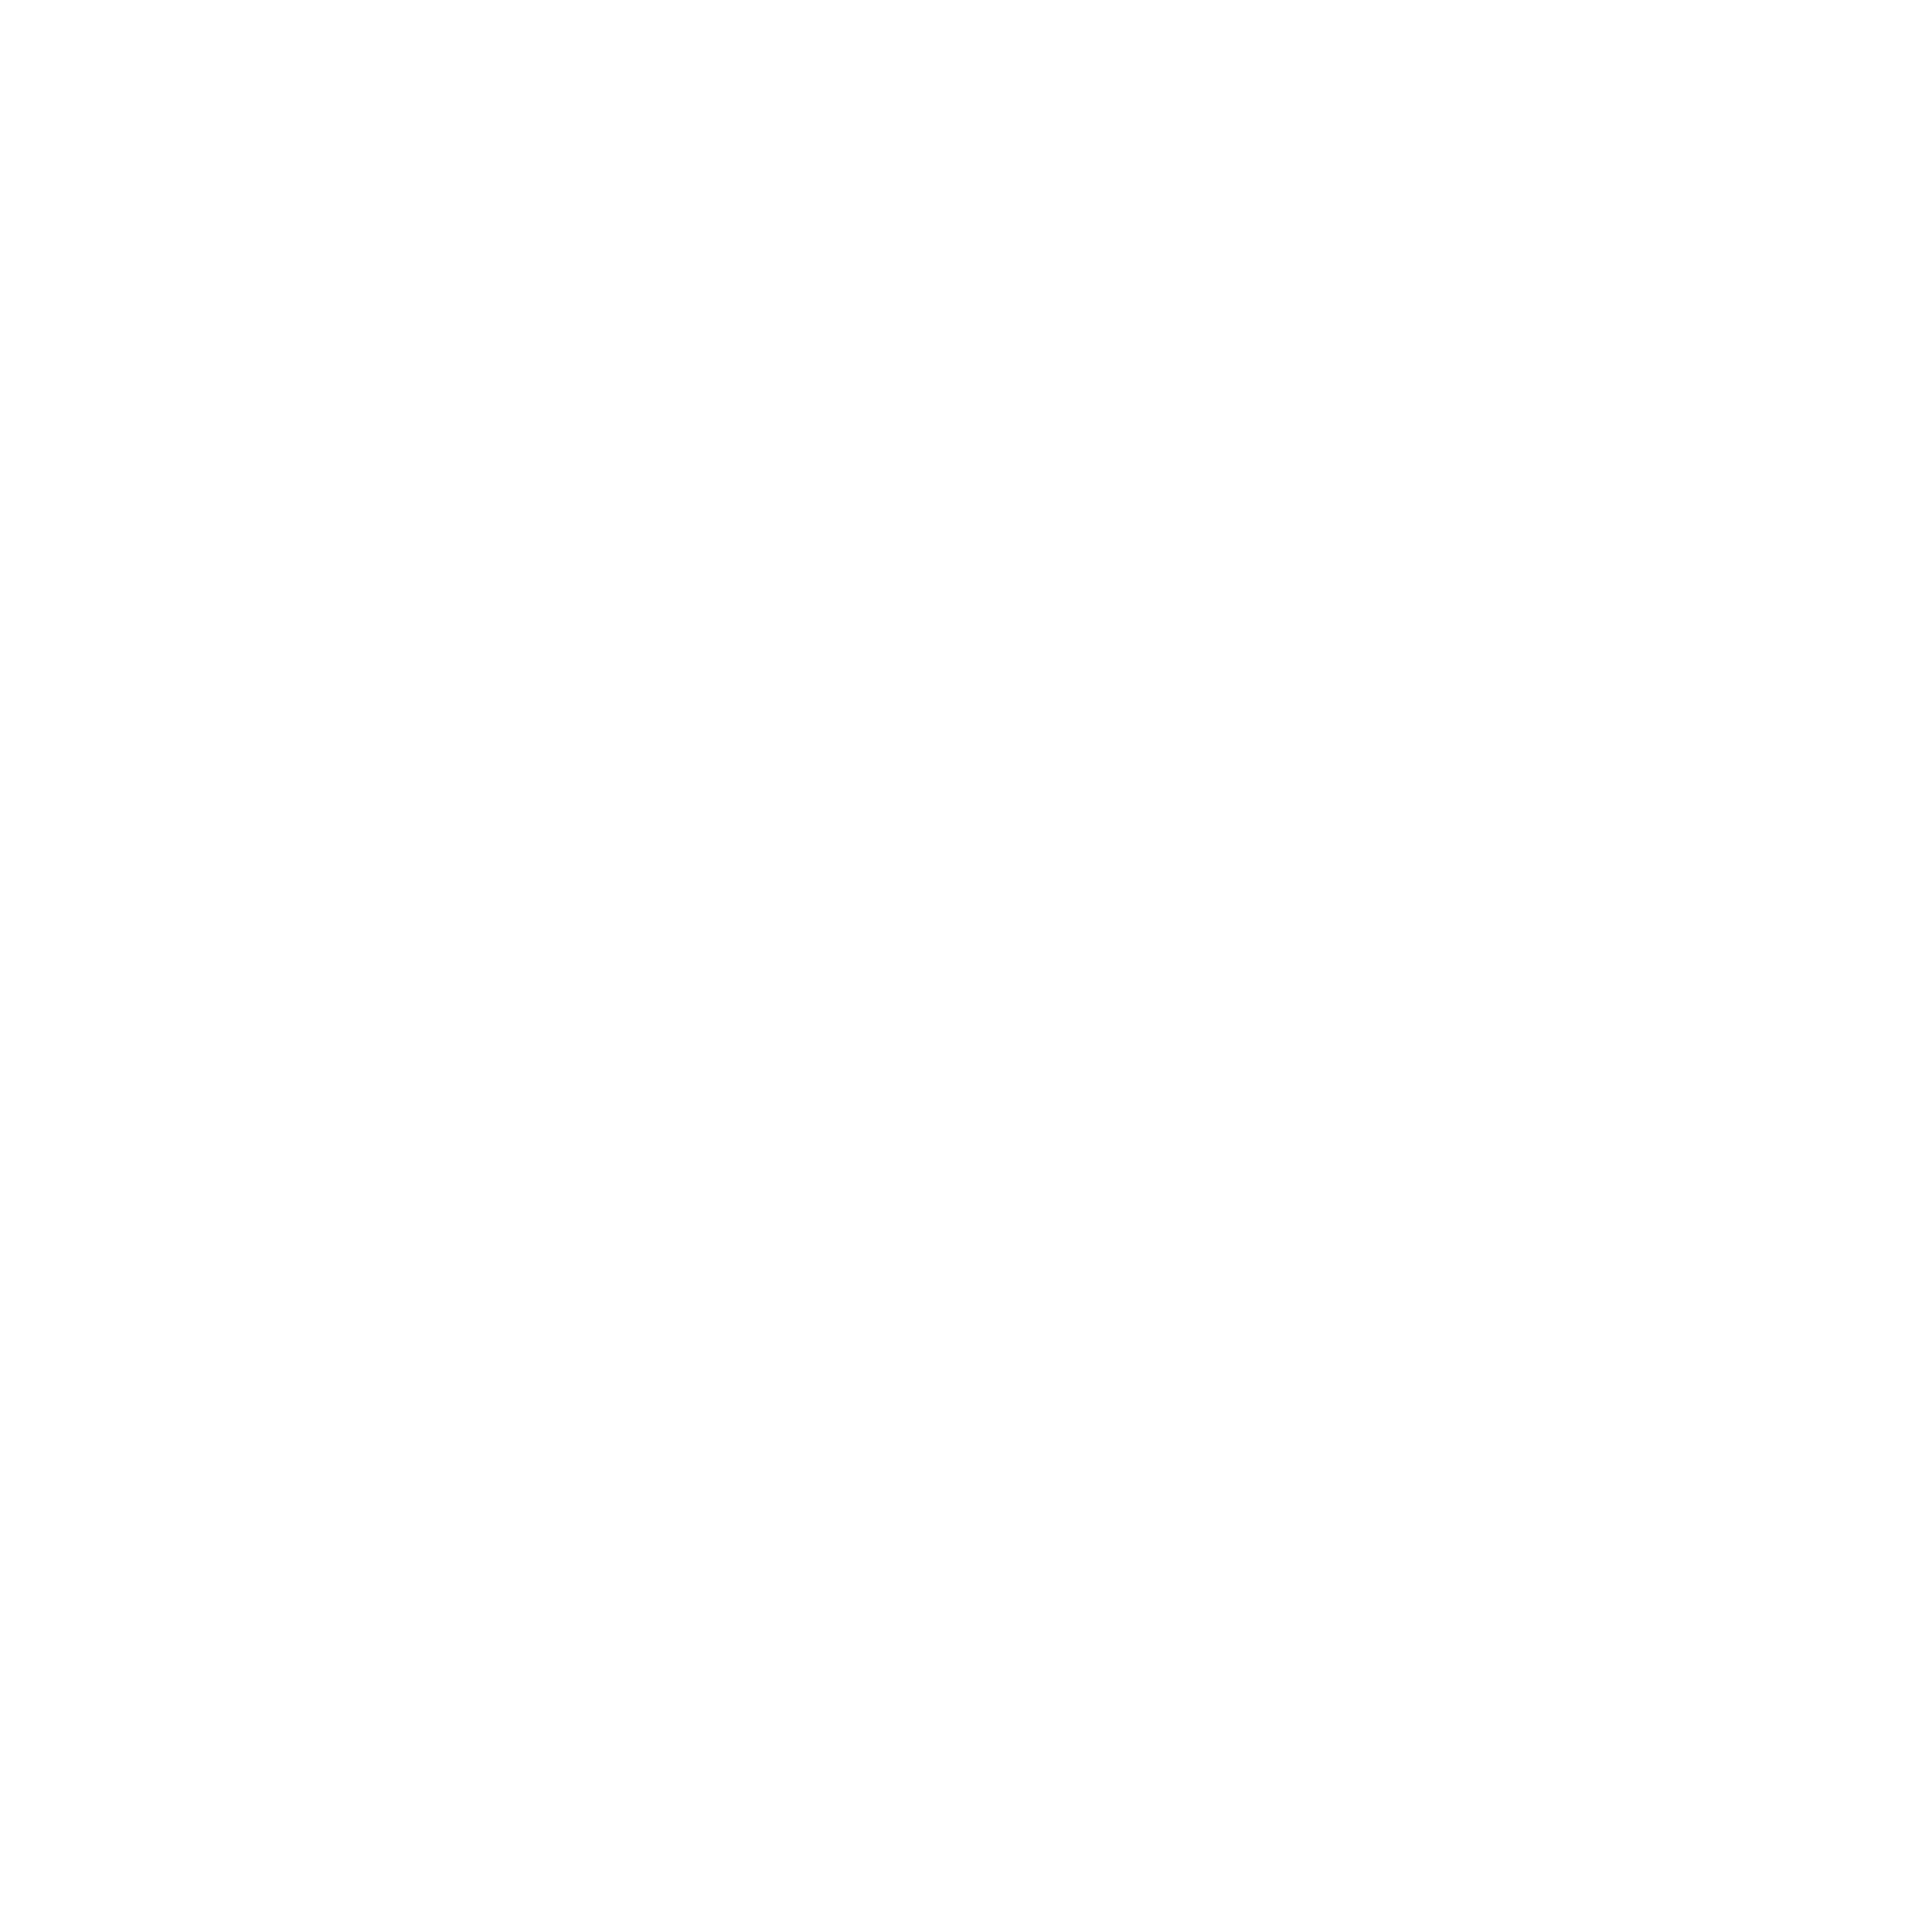 CHEMICAL WORLD